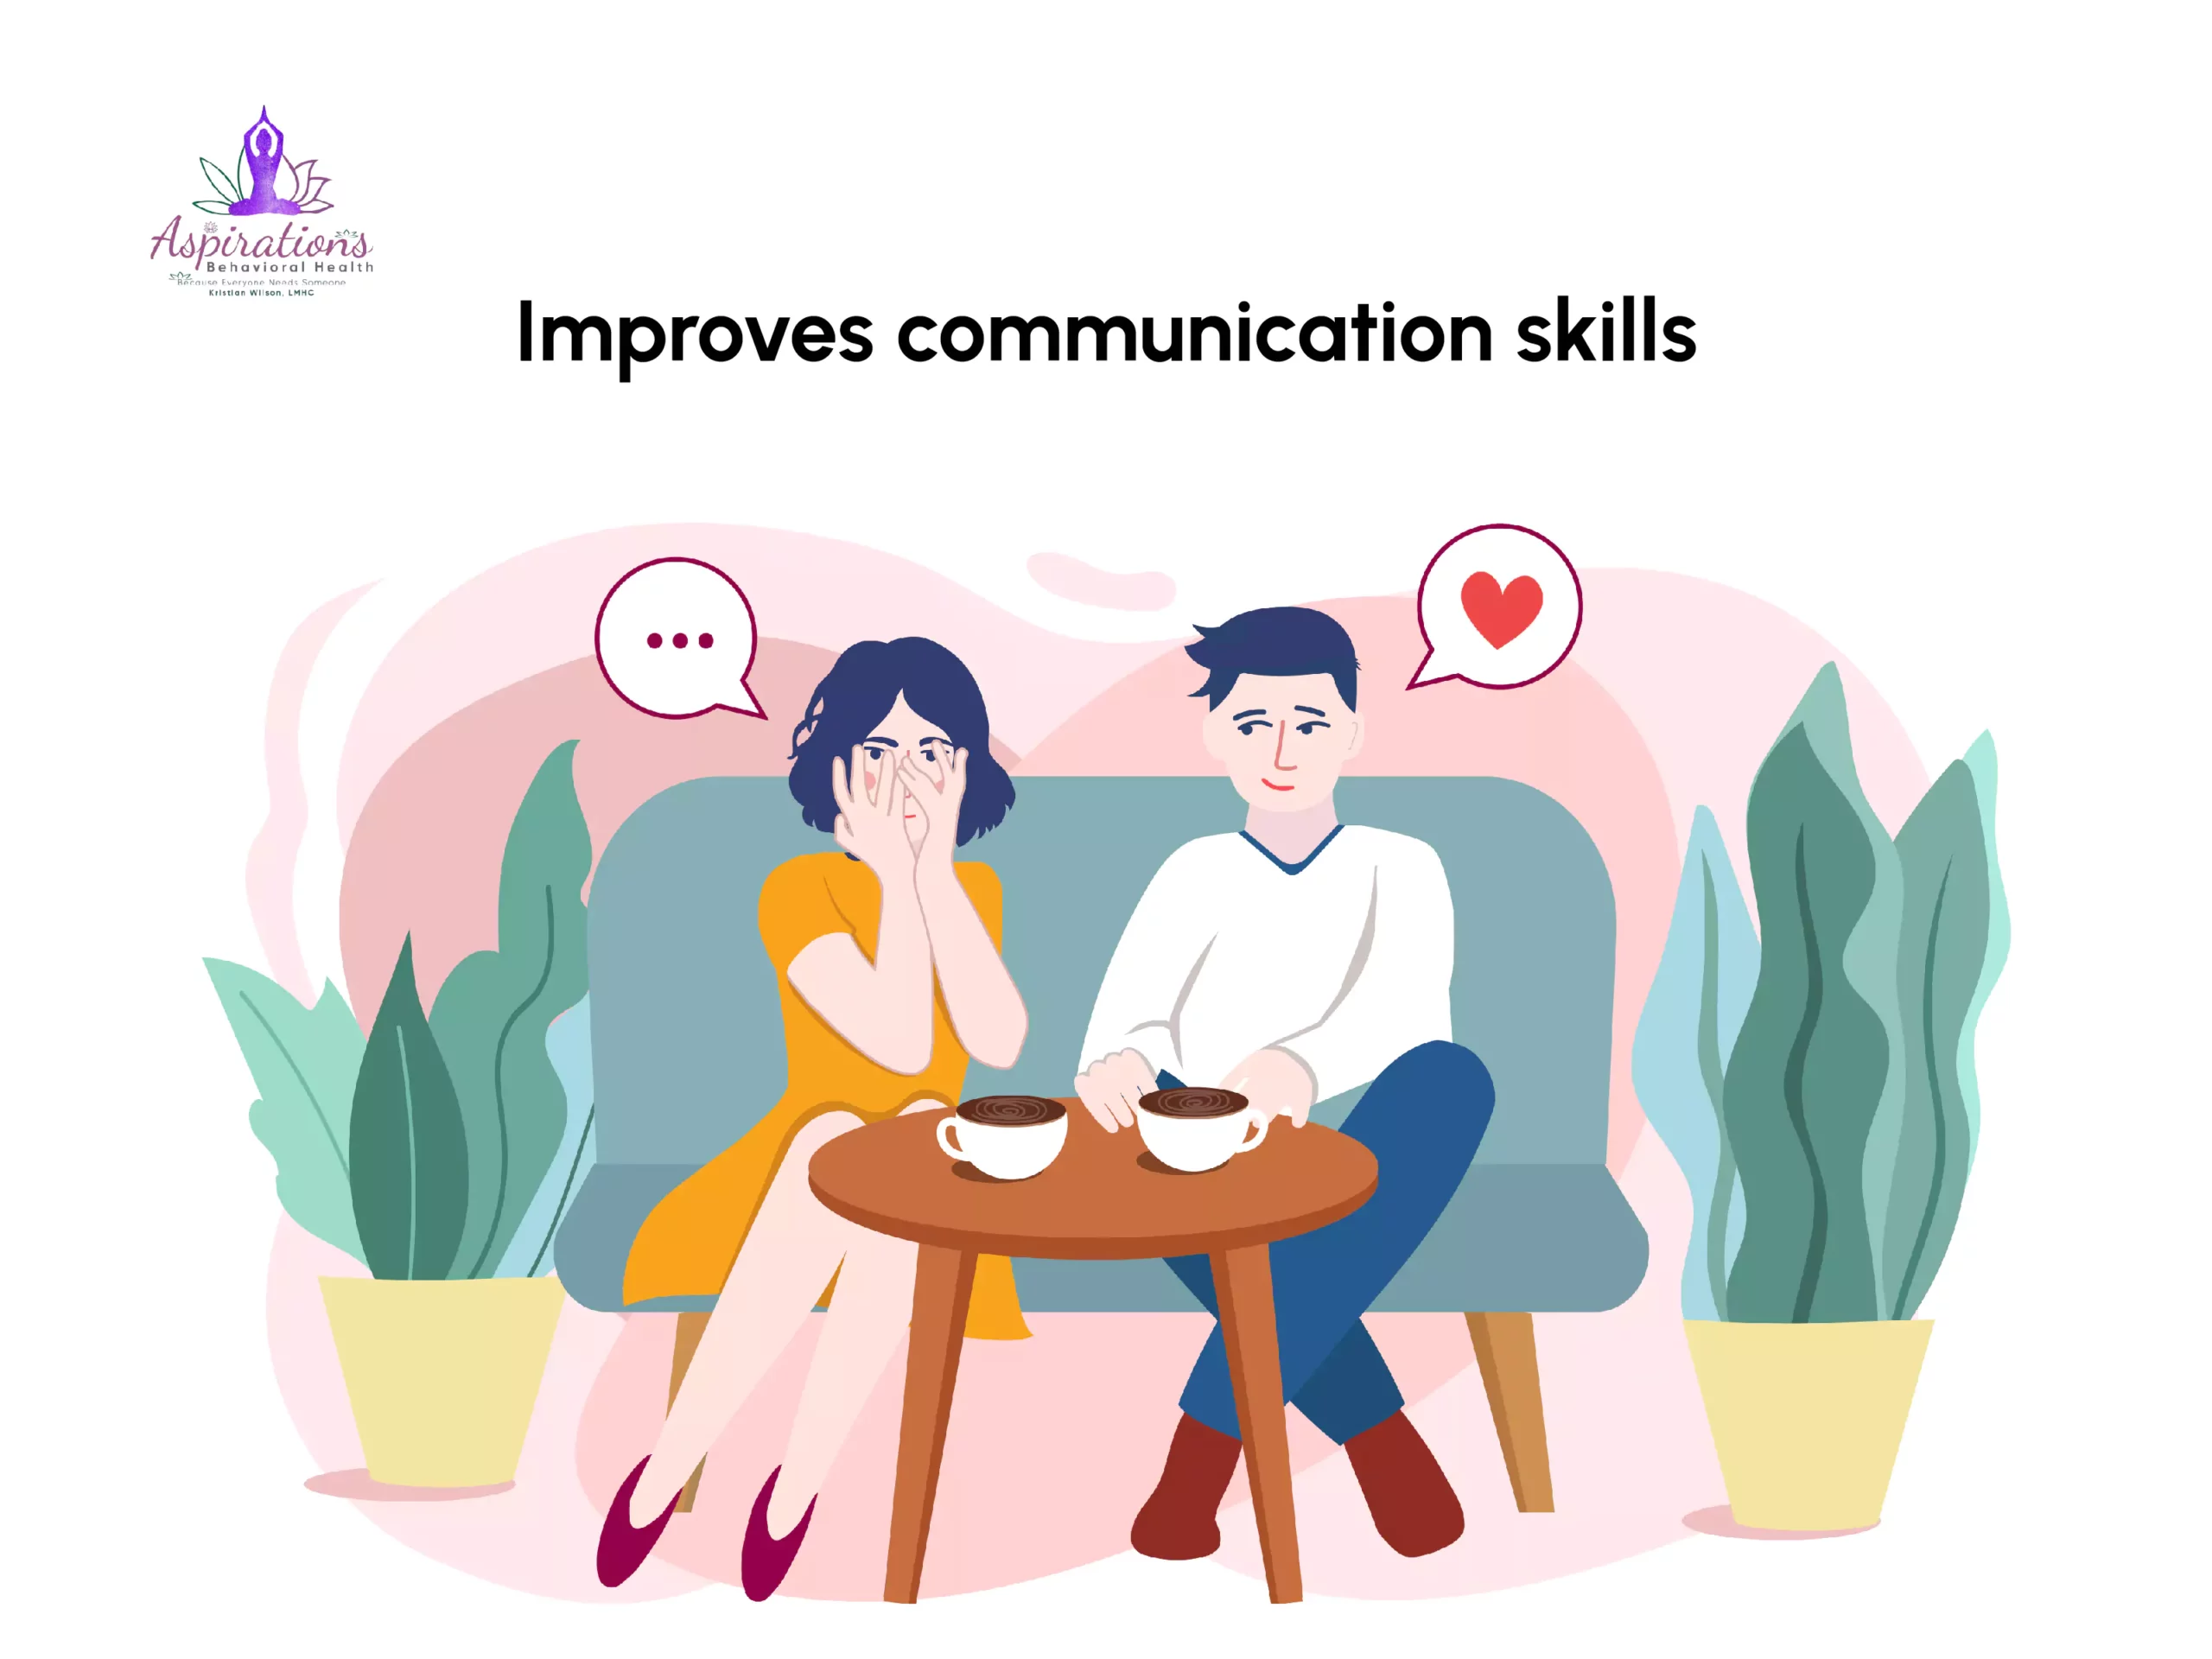 Improves communication skills